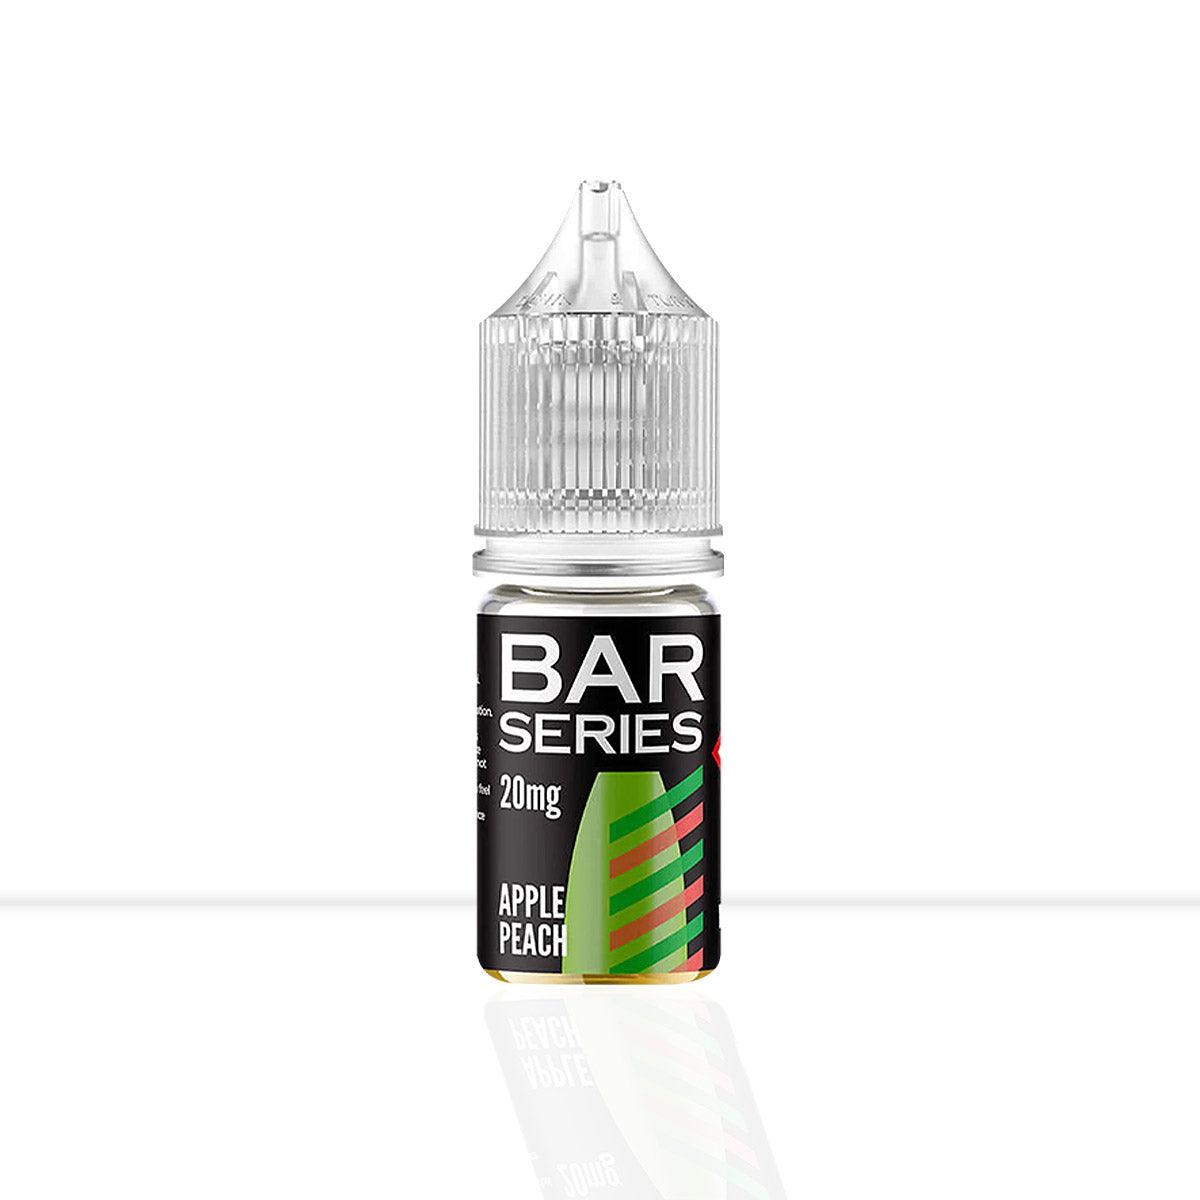 Apple & Peach Nic Salt E-Liquid Bar Series - Apple & Peach Nic Salt E-Liquid Bar Series - E Liquid